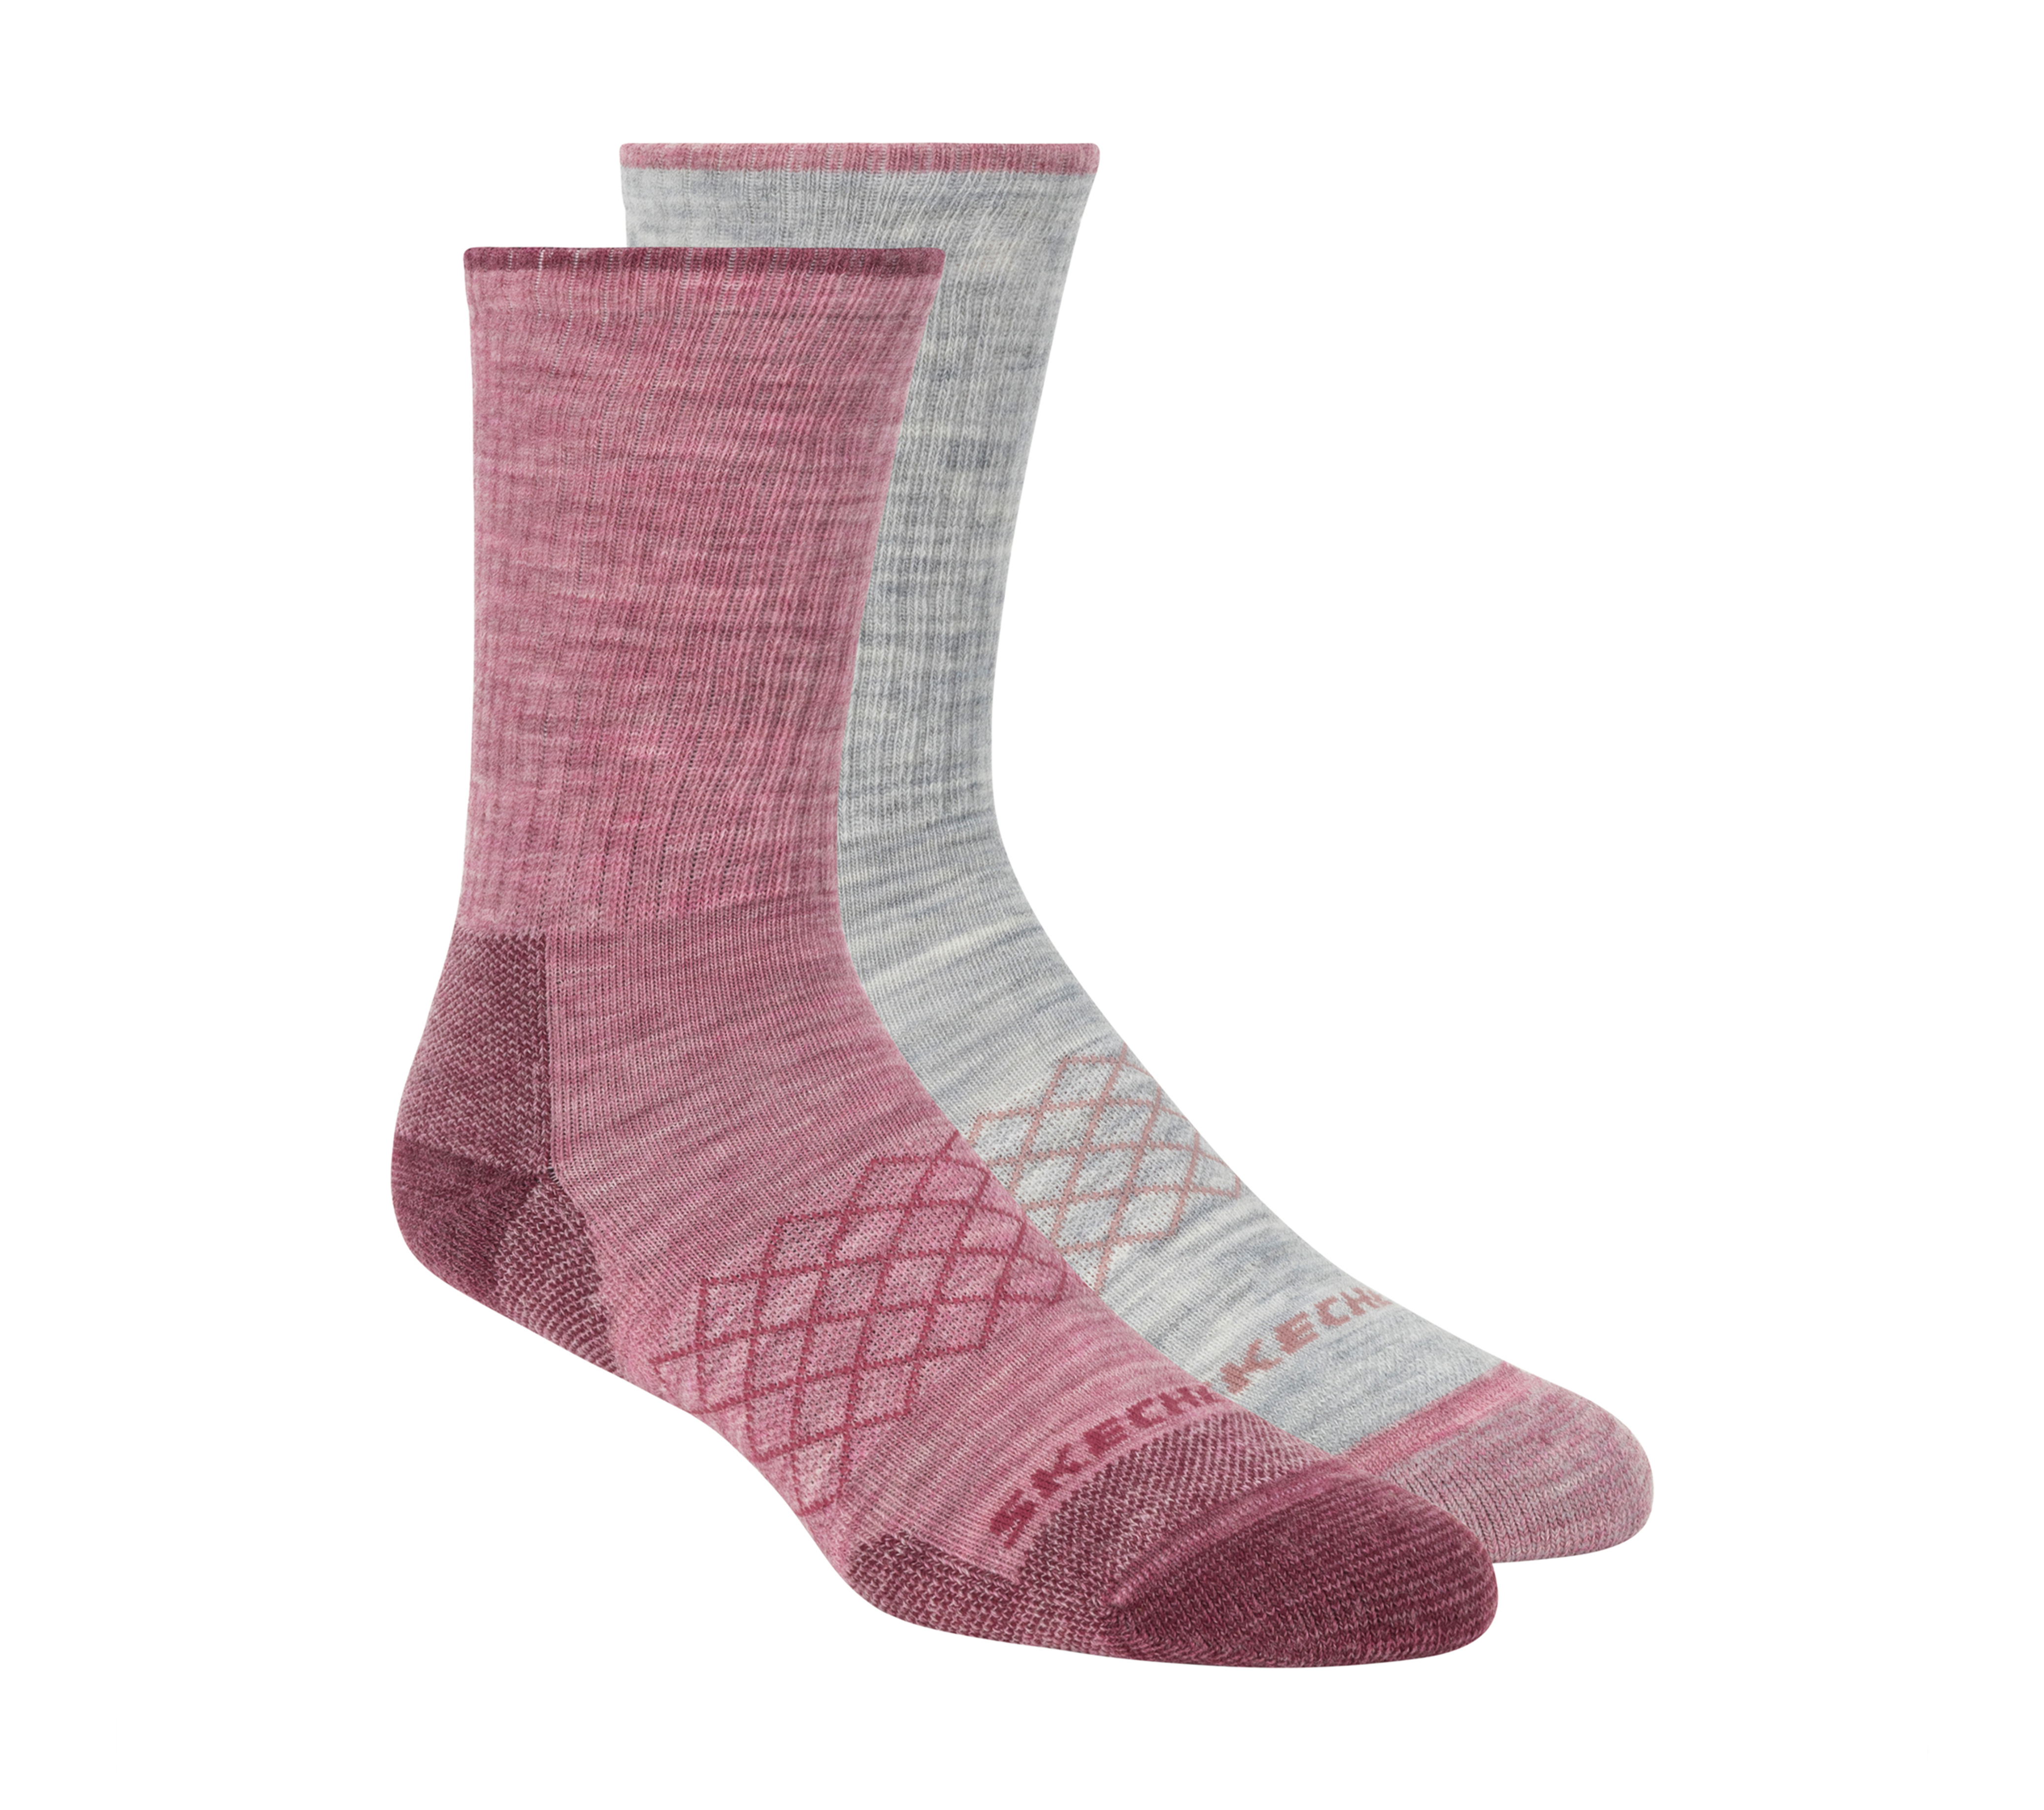 Color Explosion Compression Socks For Women Casual Fashion Crew Socks